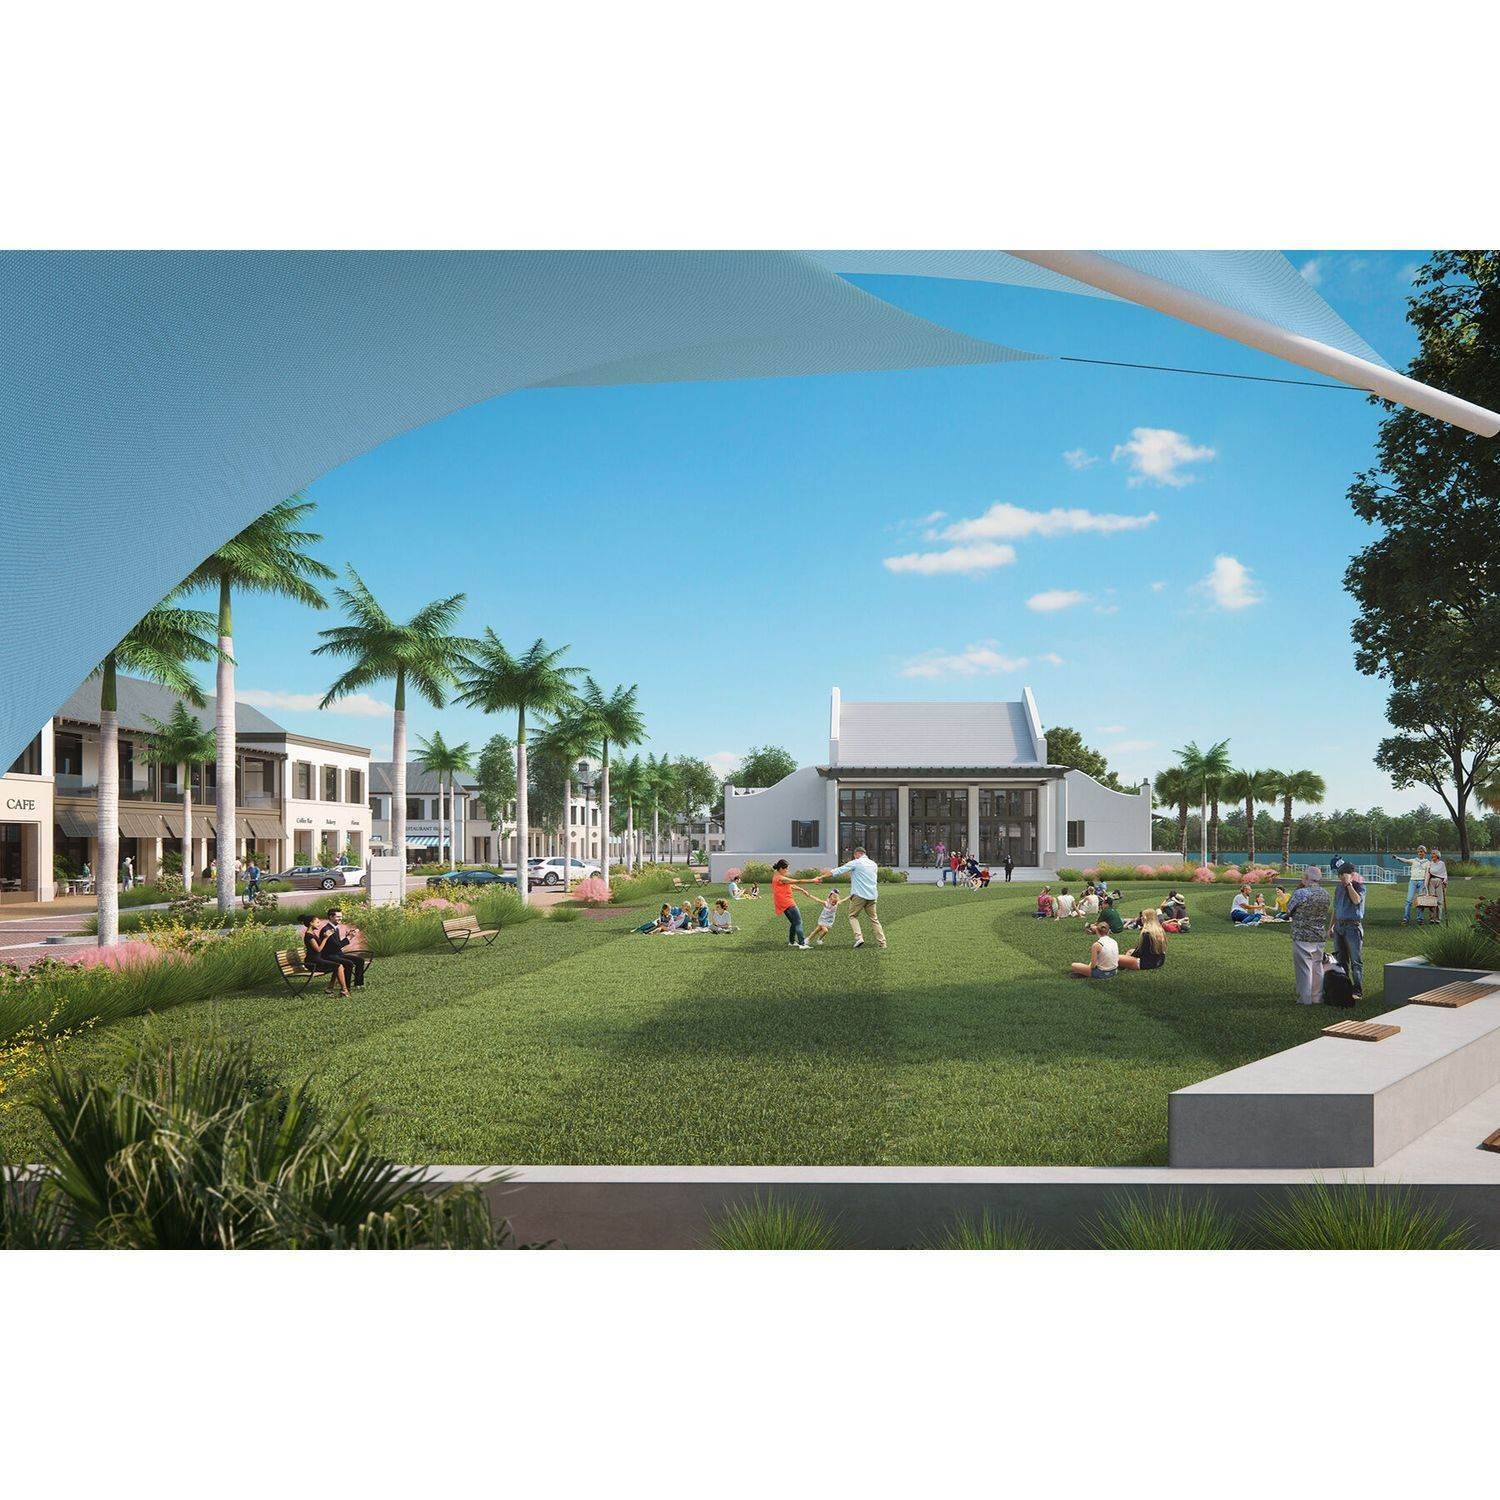 19. Wellen Park - Brightmore xây dựng tại 11410 Myakka Blue Dr, Venice, FL 34293